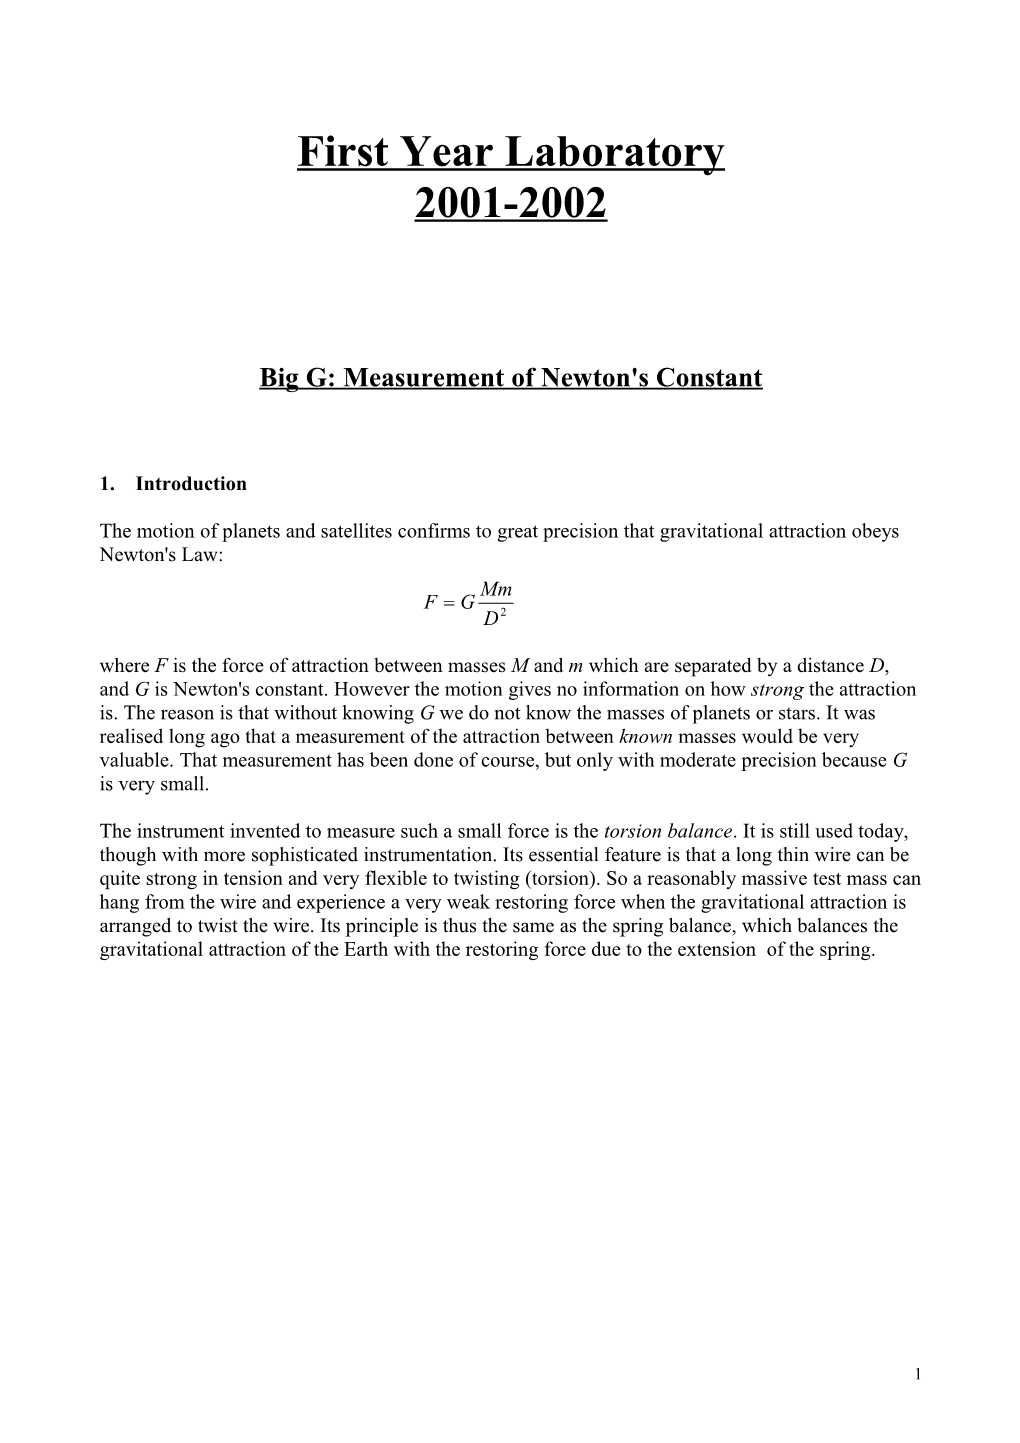 Big G: Measurement of Newton's Constant